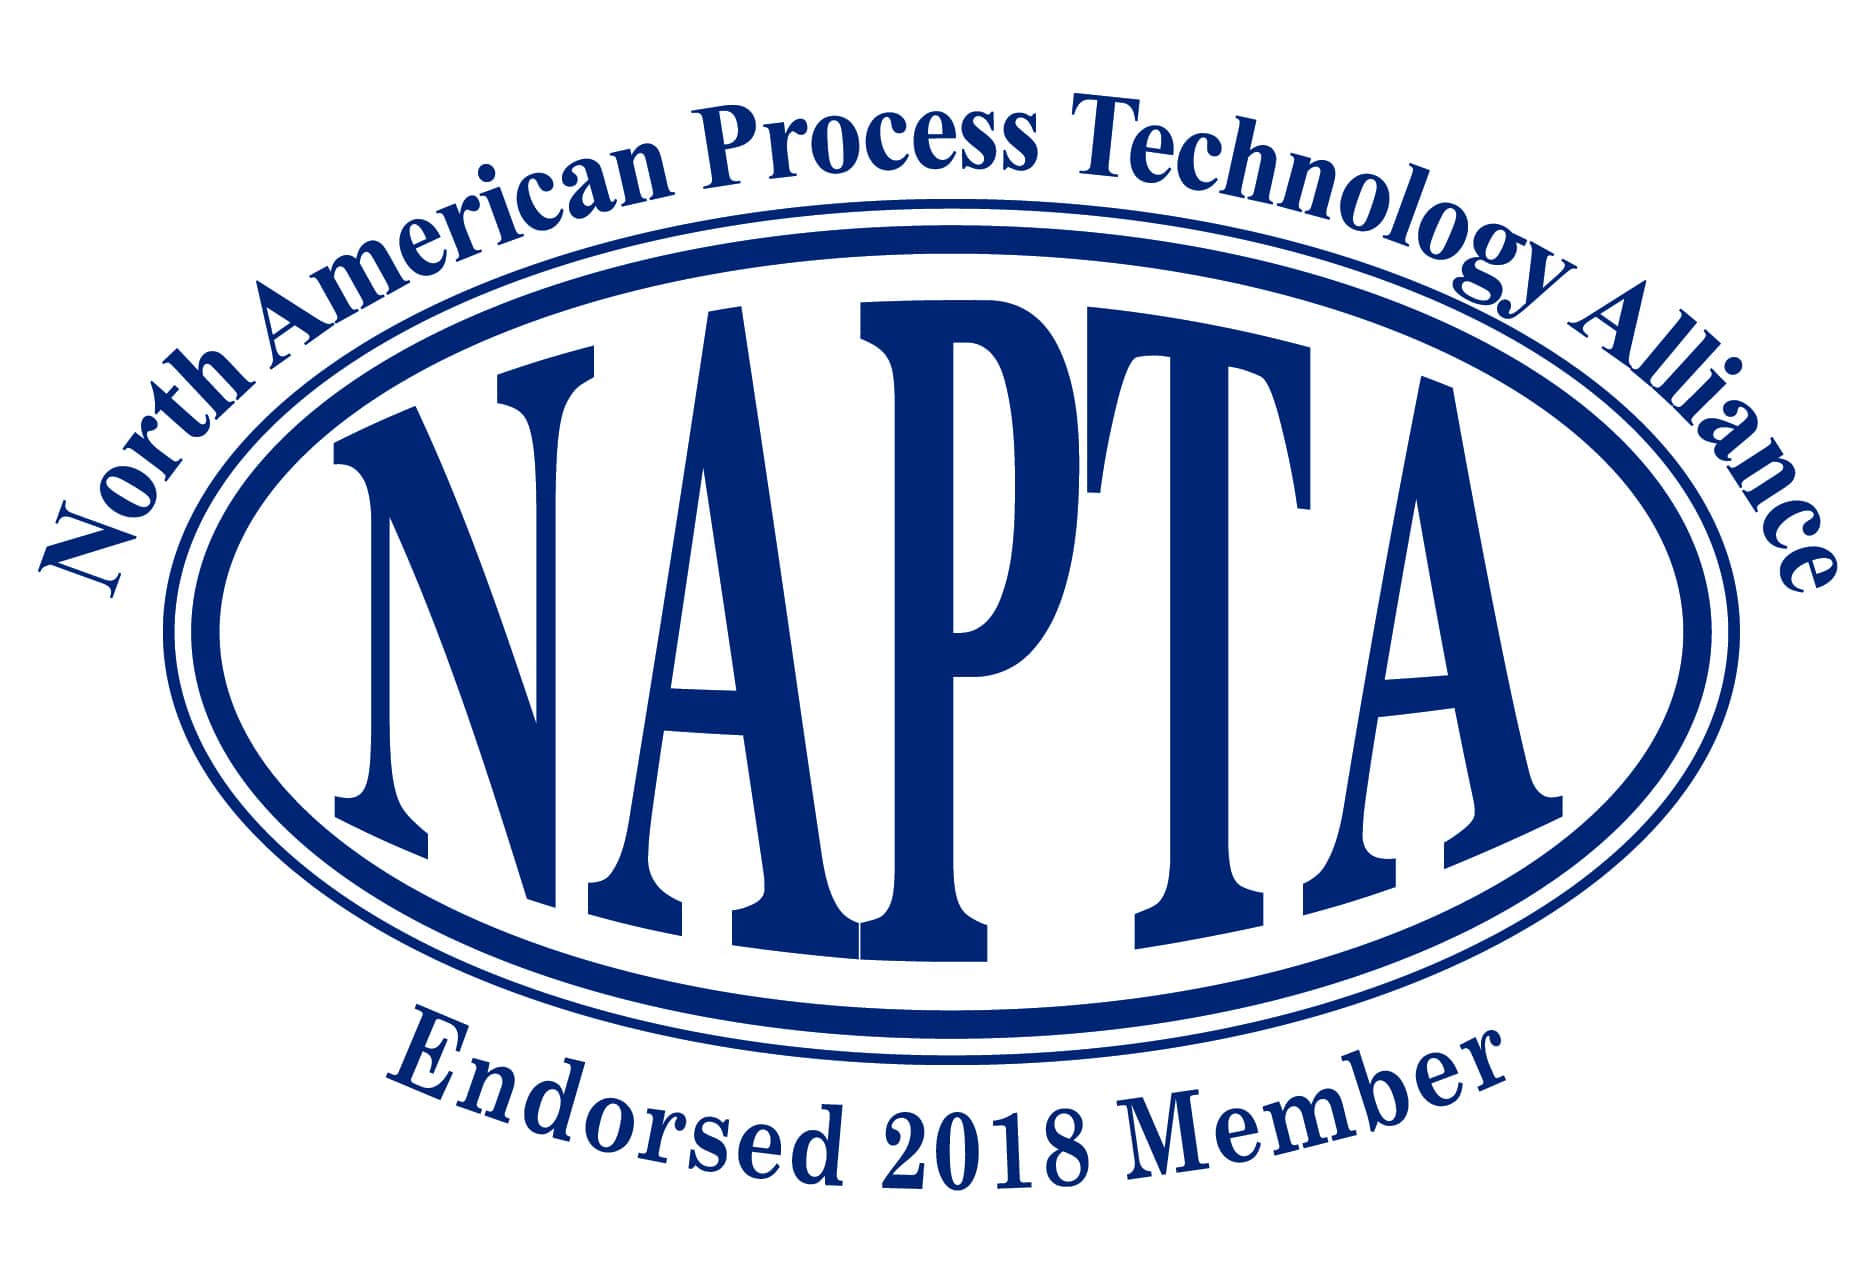 North American Process Technology Alliance (NAPTA).